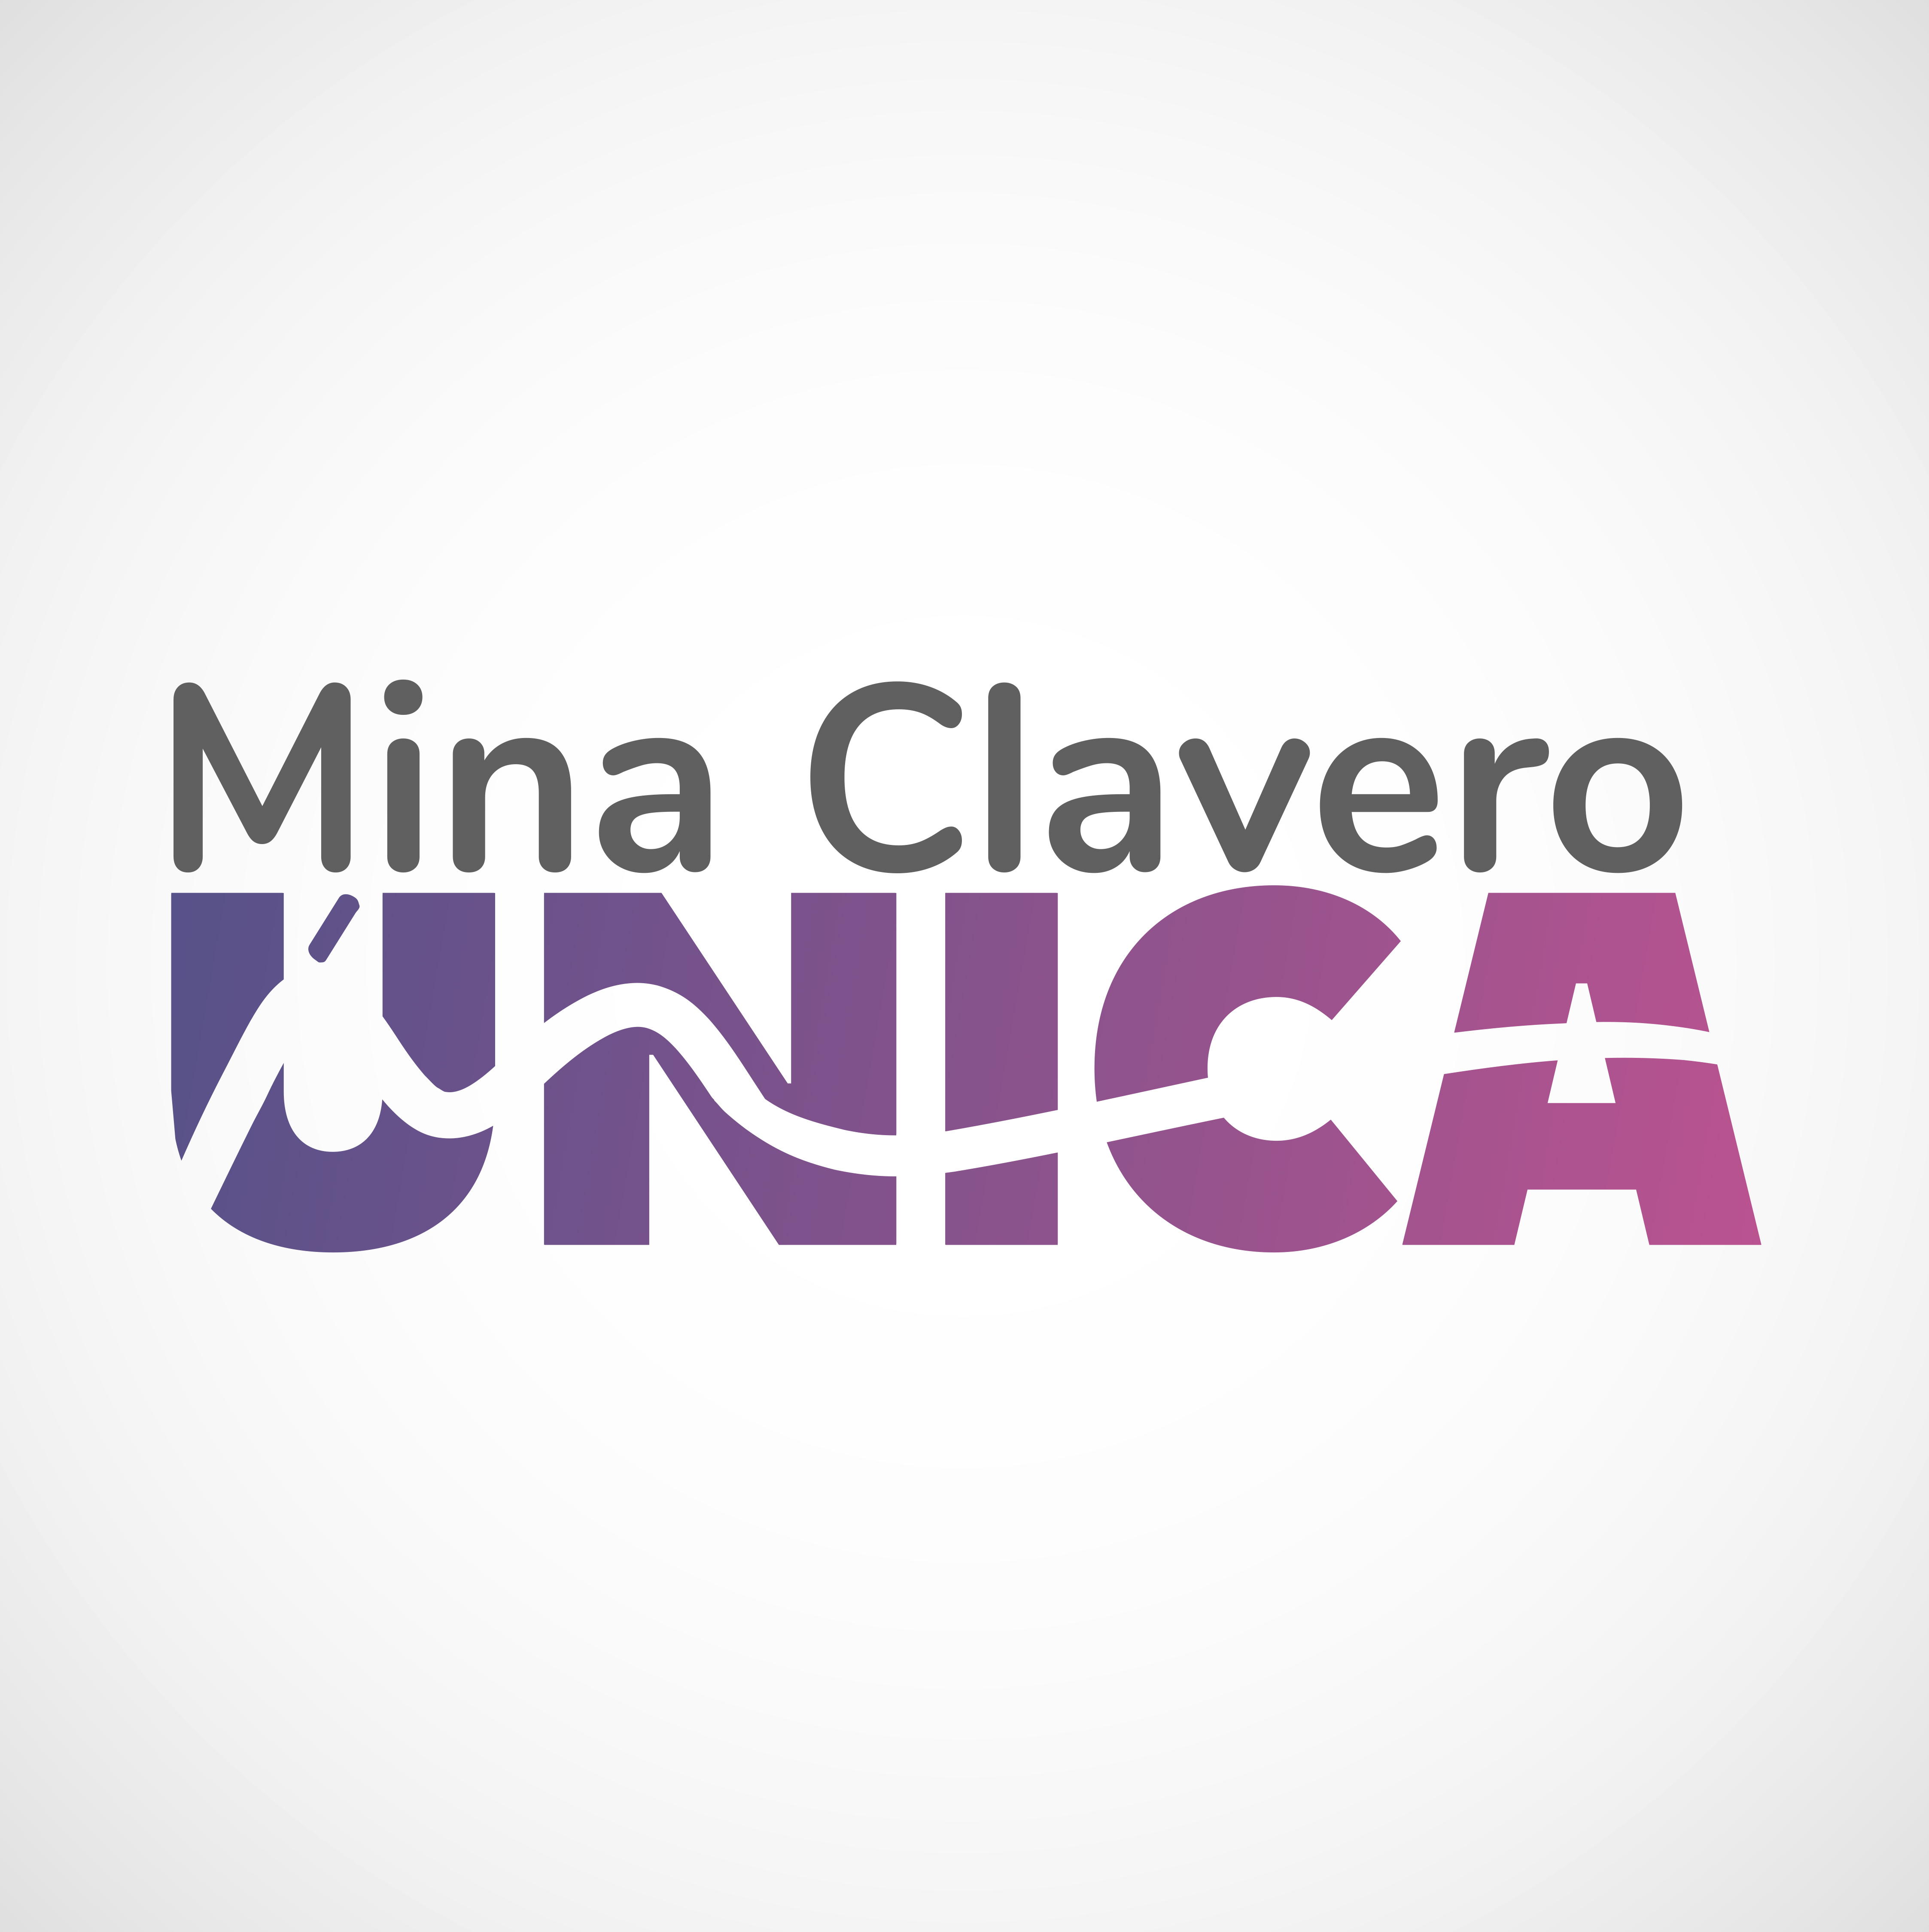 Mina Clavero